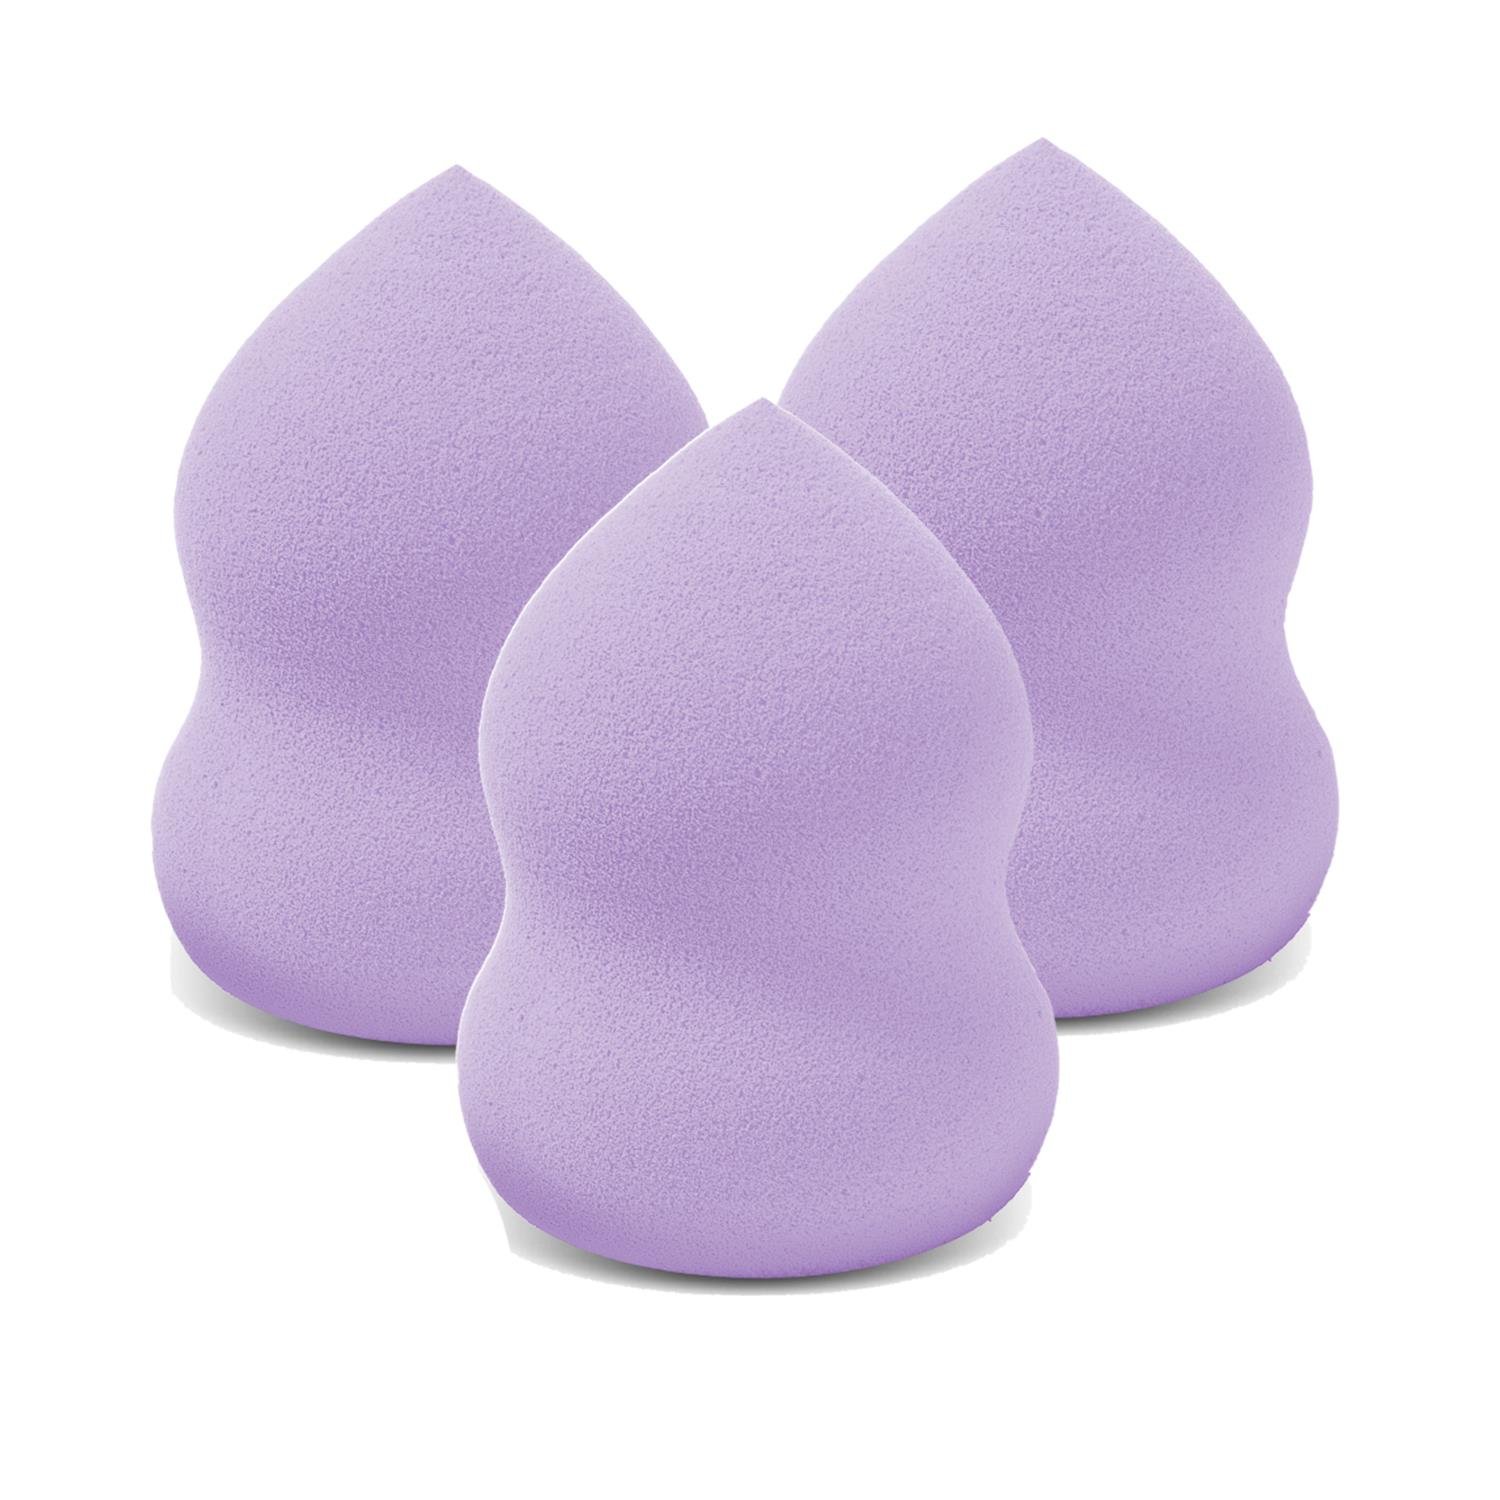 Envie Pretty Make-up Blending Sponge Purple x 3